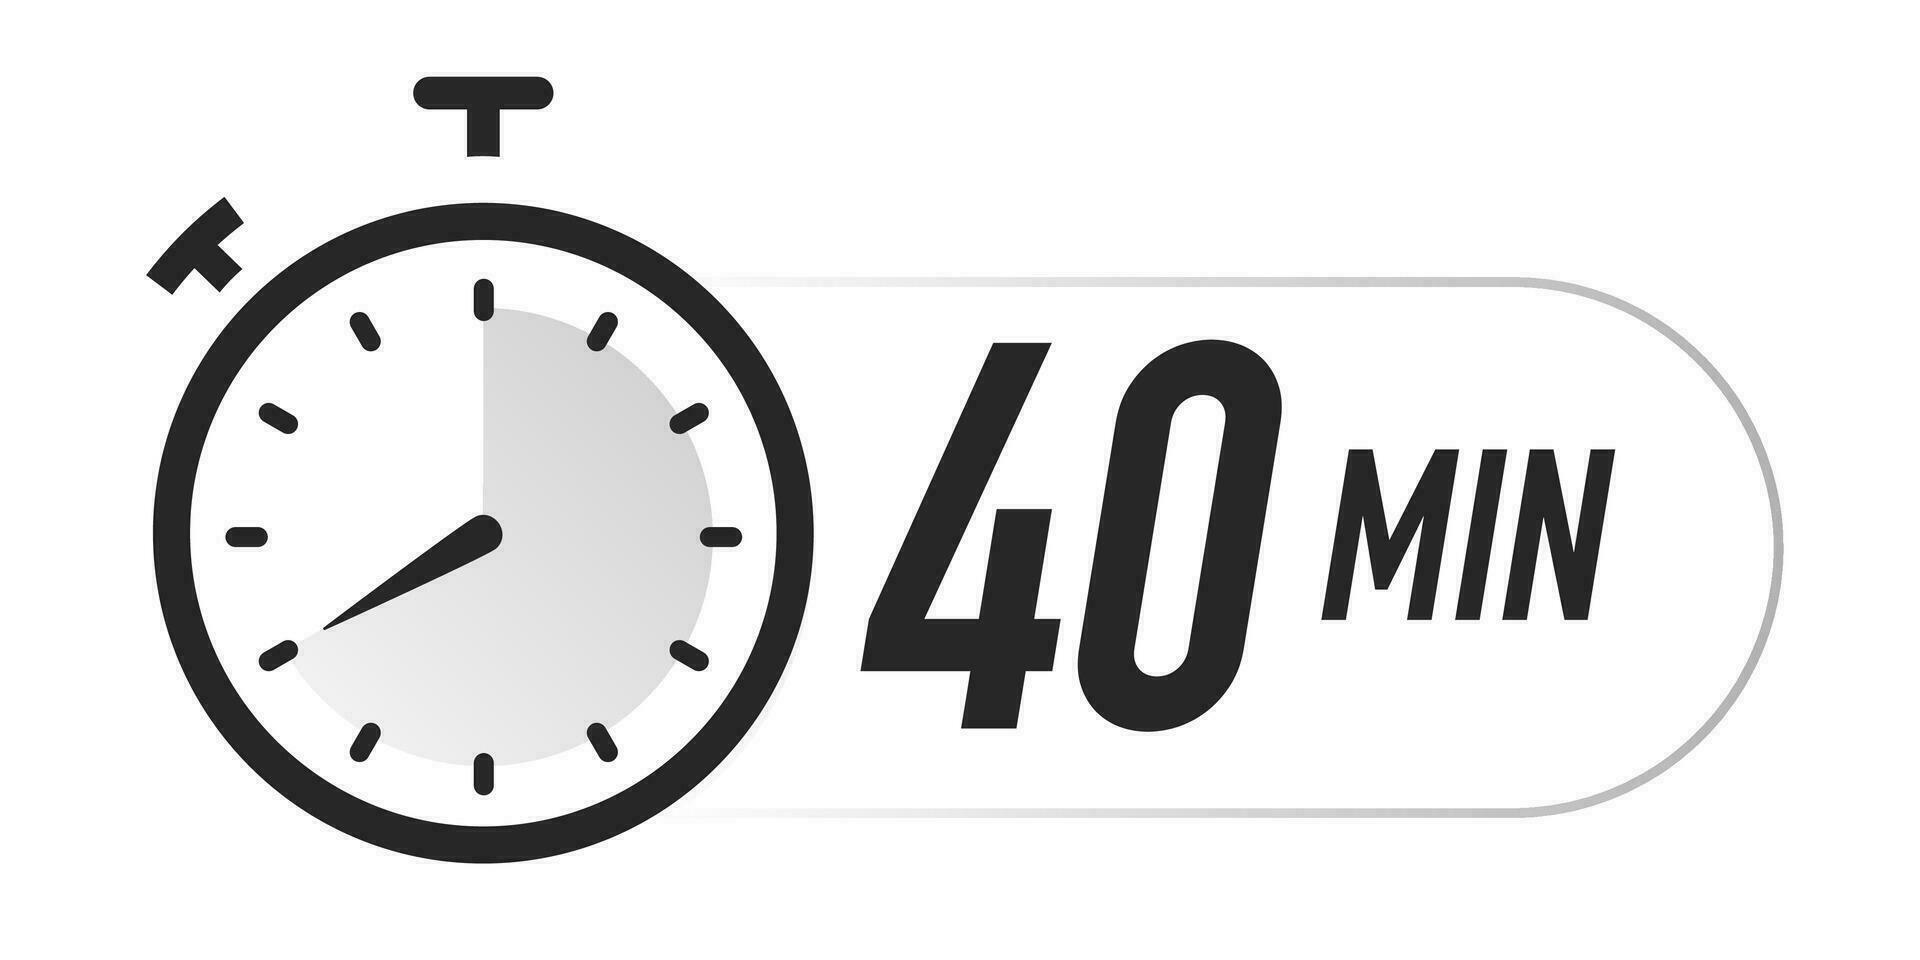 Timer icon 40 minutes vector black color